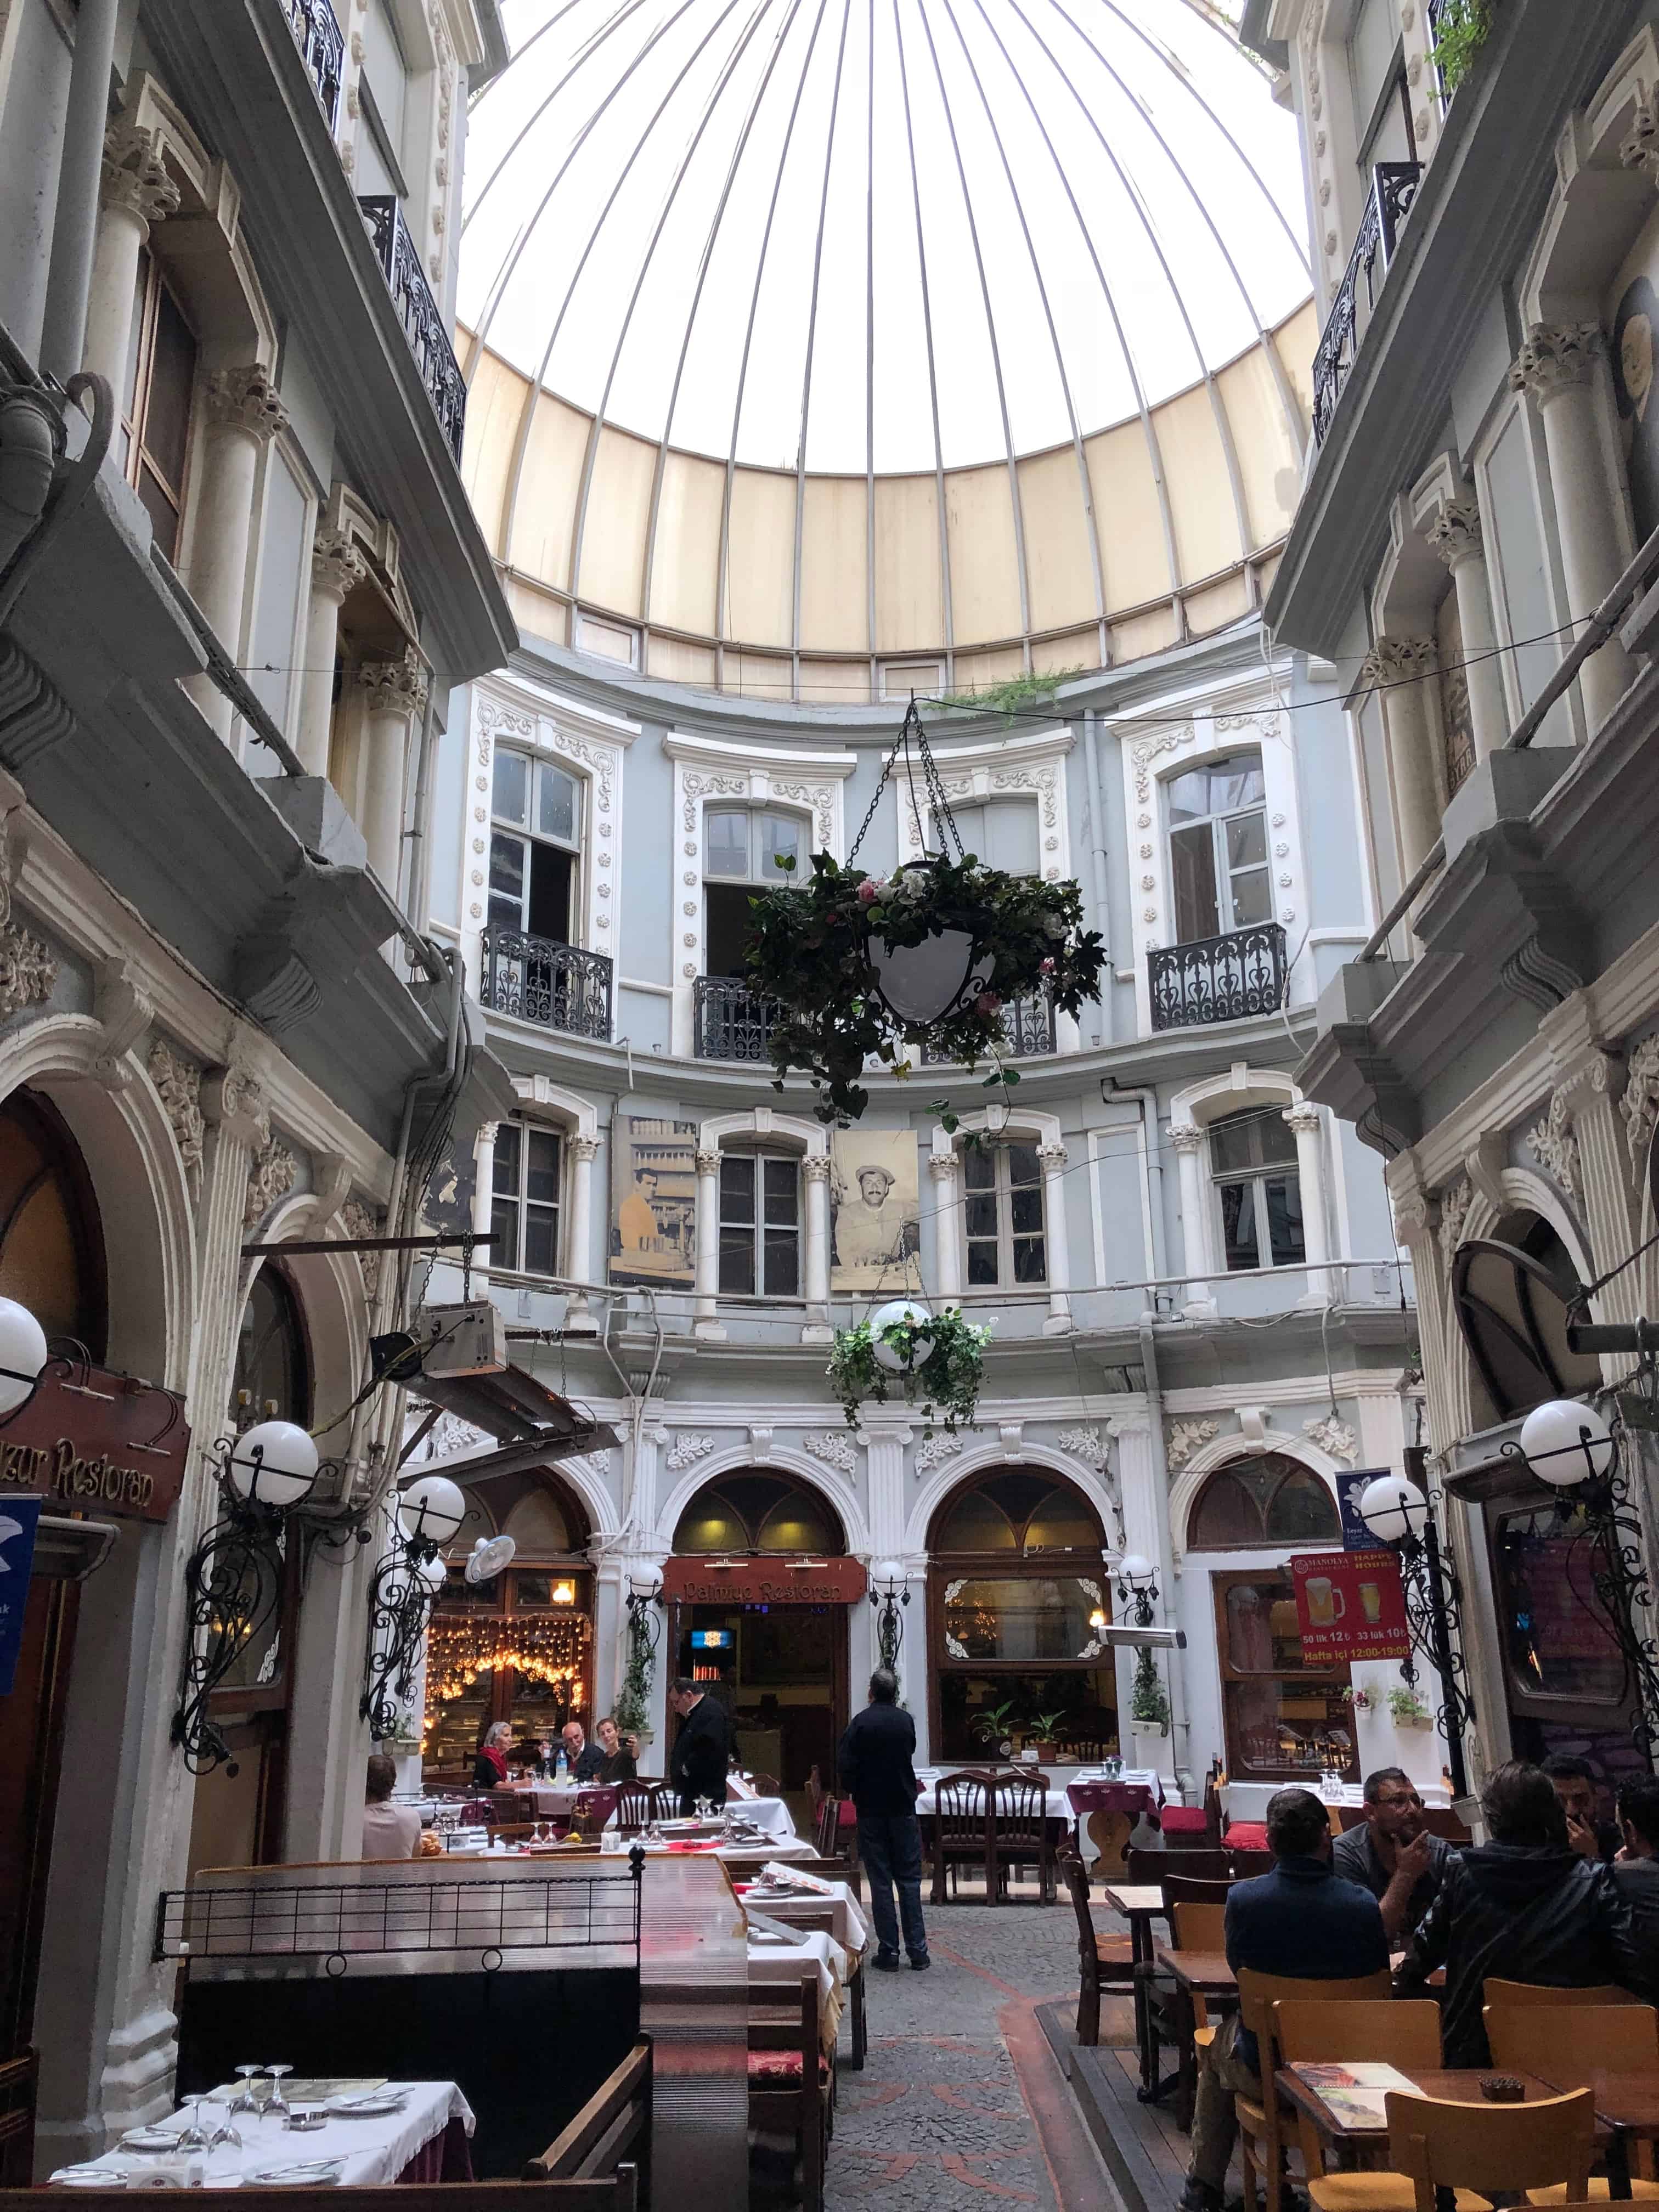 Arcade from Sahne Street of Flower Passage in Istanbul, Turkey